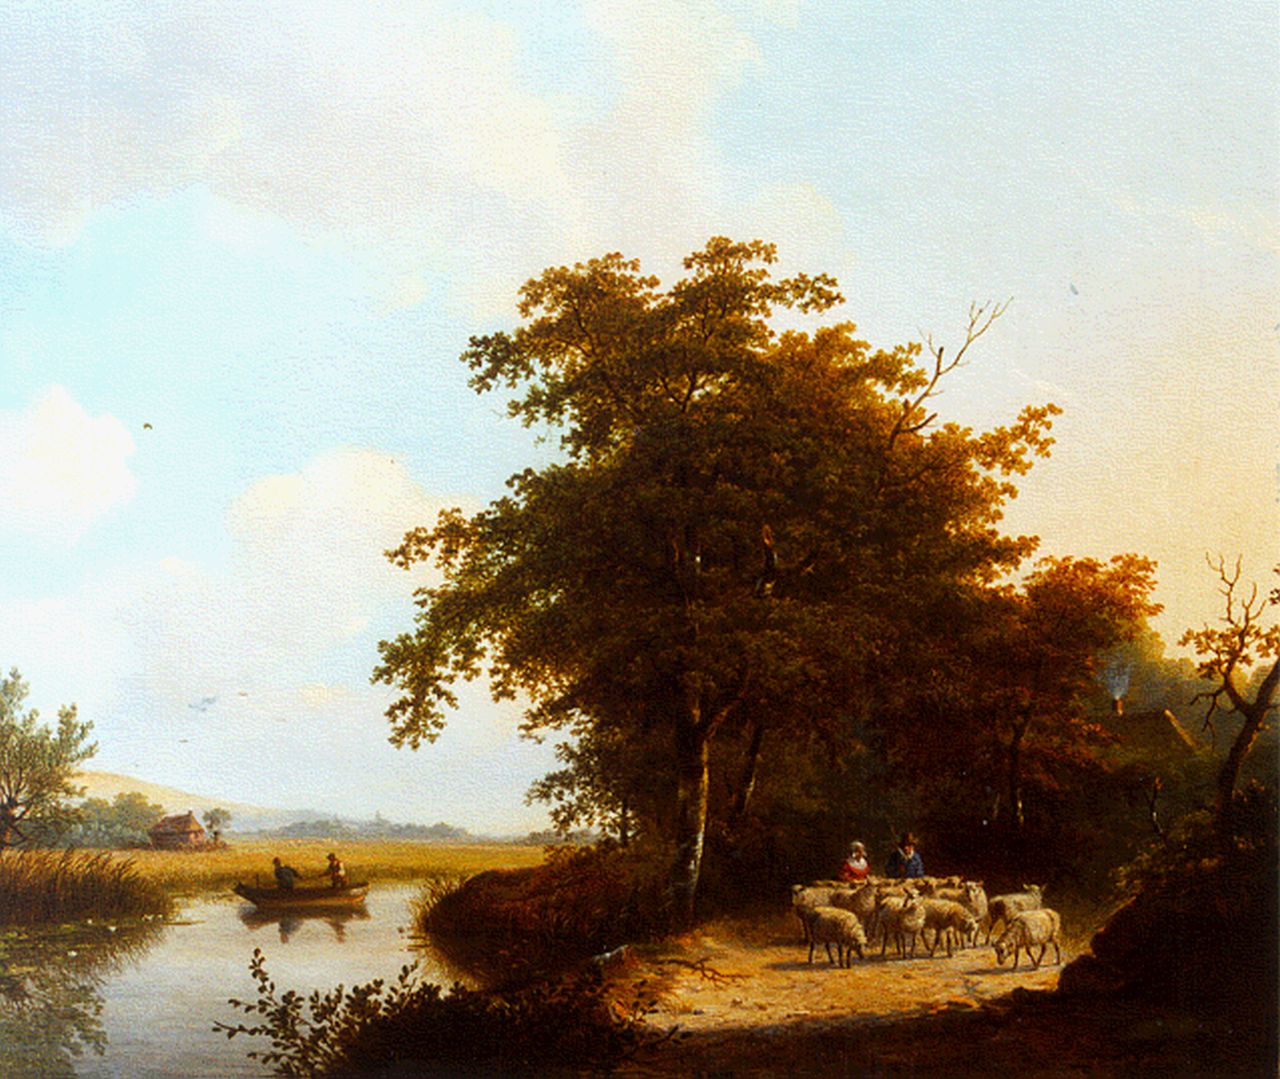 Stok J. van der | Jacobus van der Stok, A wooded landscape, oil on canvas 50.4 x 59.0 cm, signed l.r. and dated '30